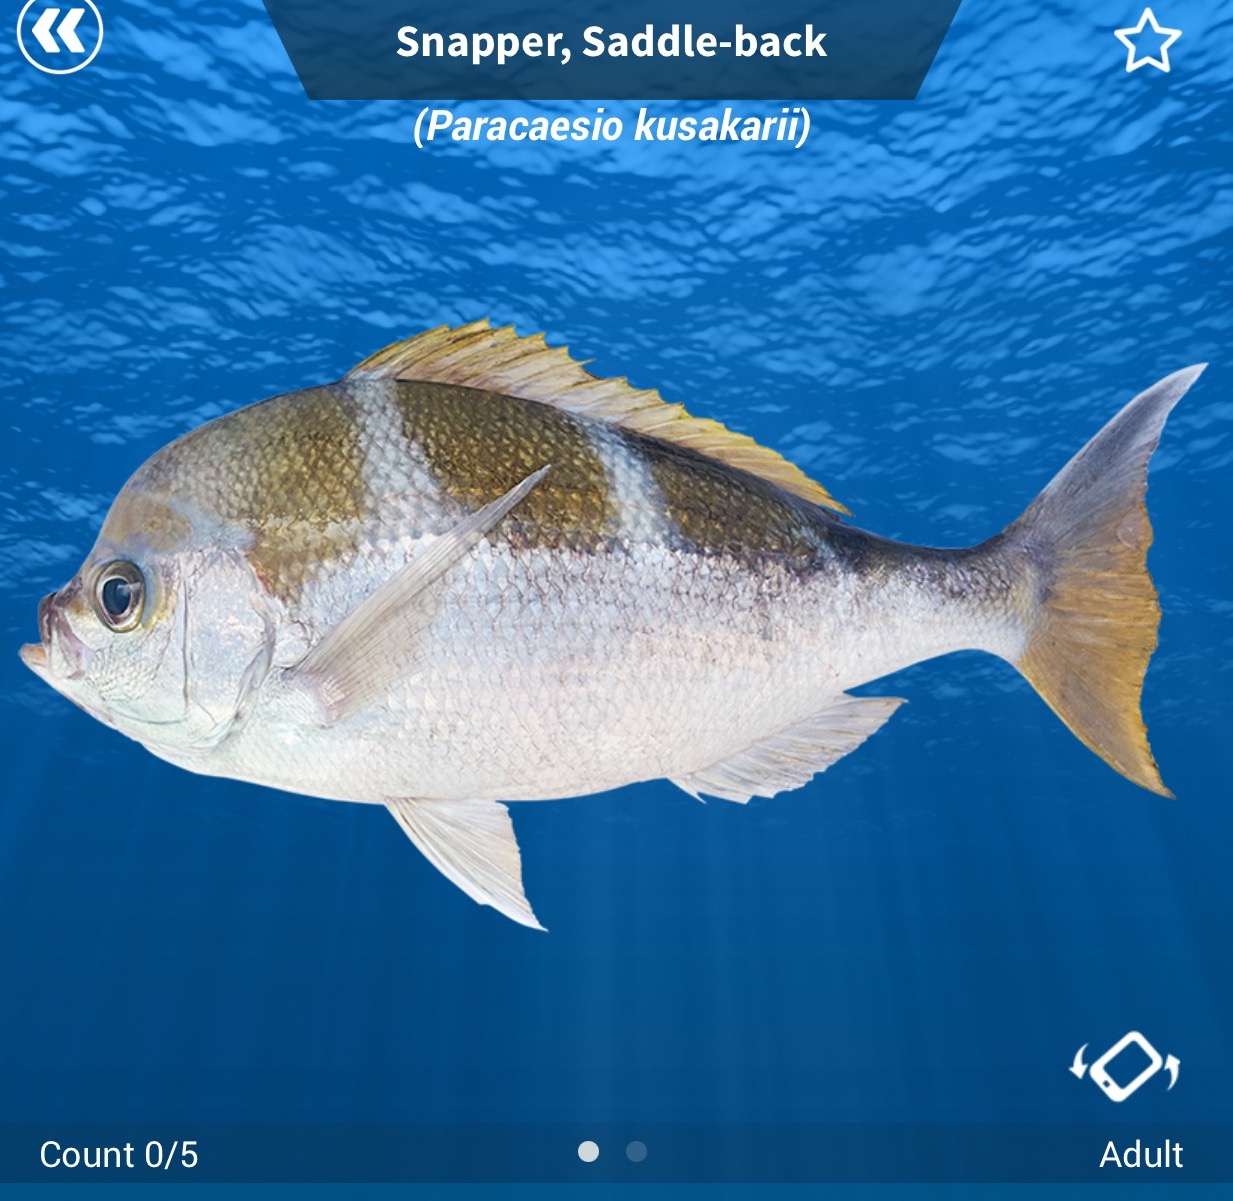 iDfish - Fish Identification Application